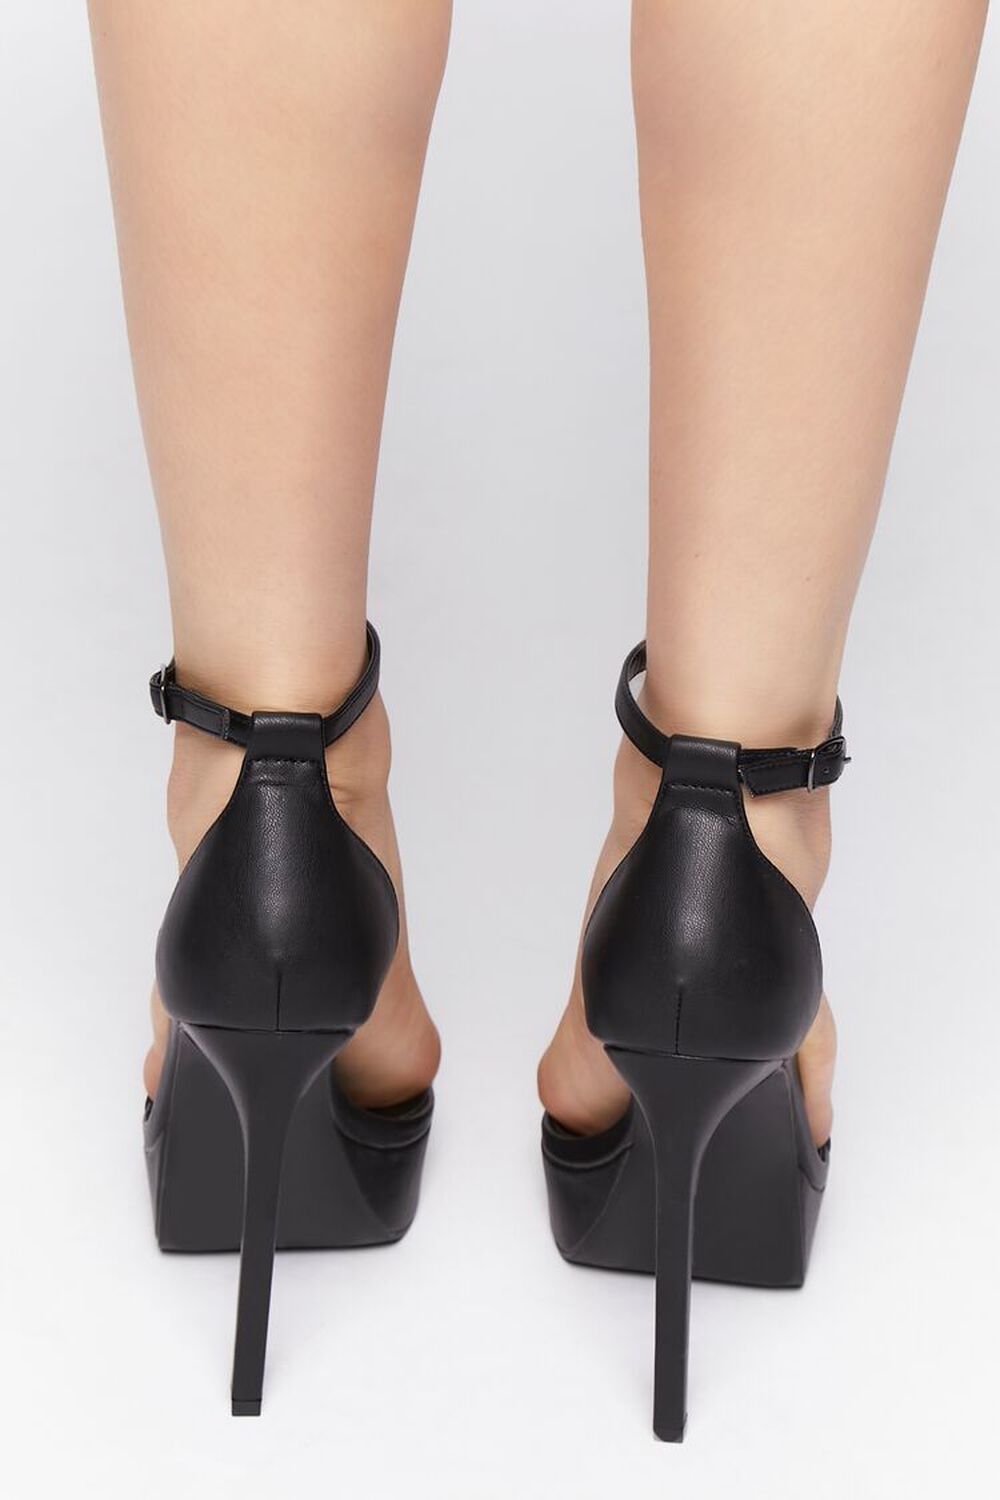 Open-Toe Platform Stiletto Heels